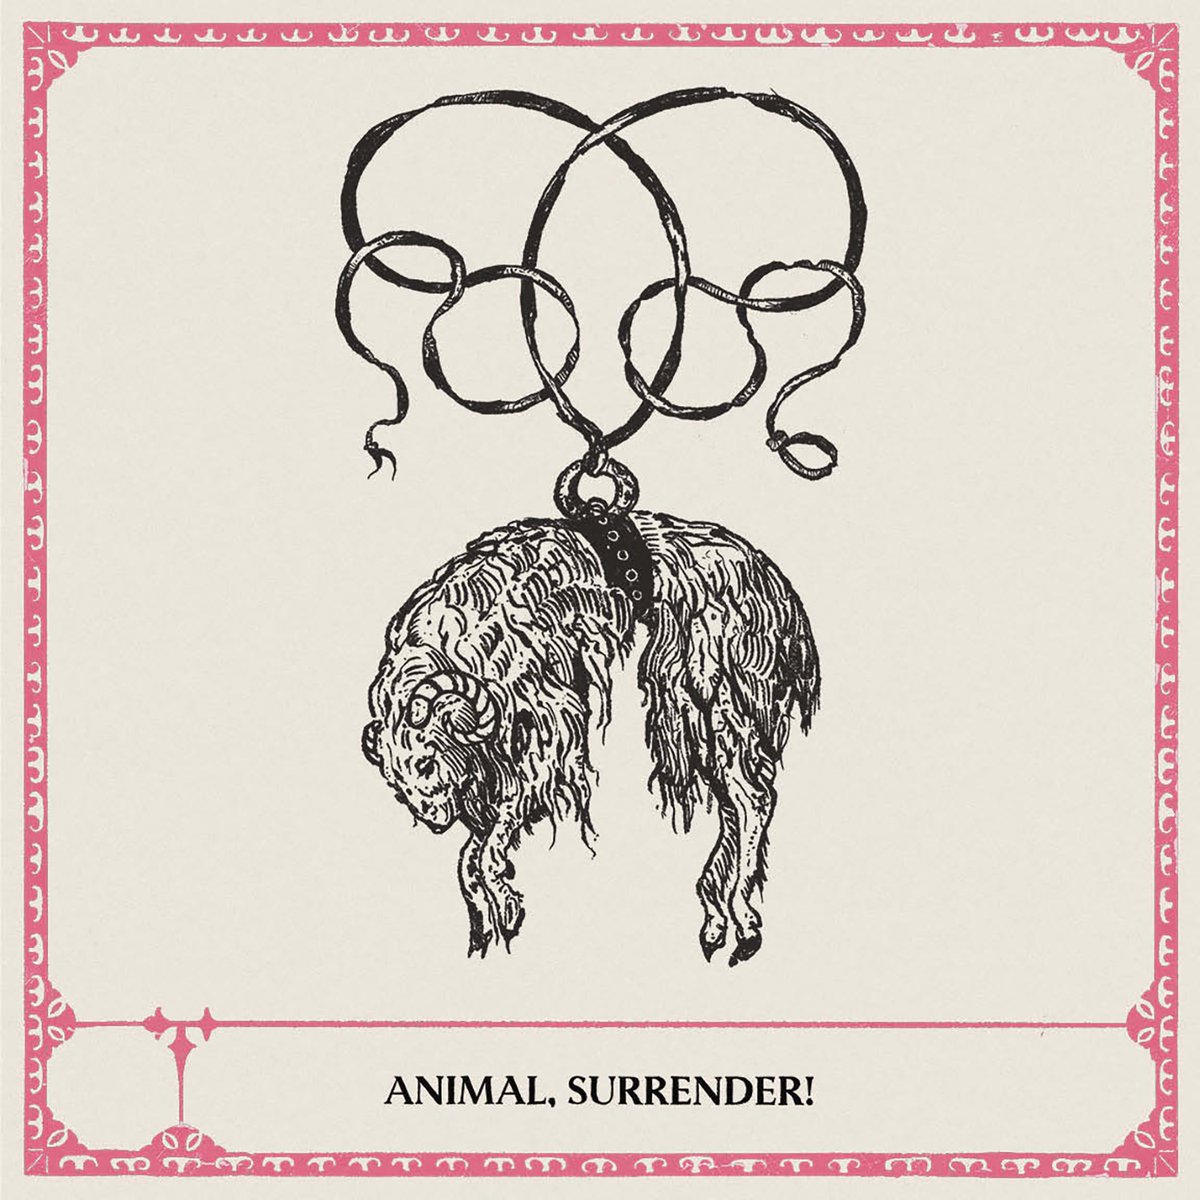 Animal, Surrender! @AnimalSurrenderはアルバム'Self Titled'をリリースしました
animalsurrender.bandcamp.com/album/animal-s…